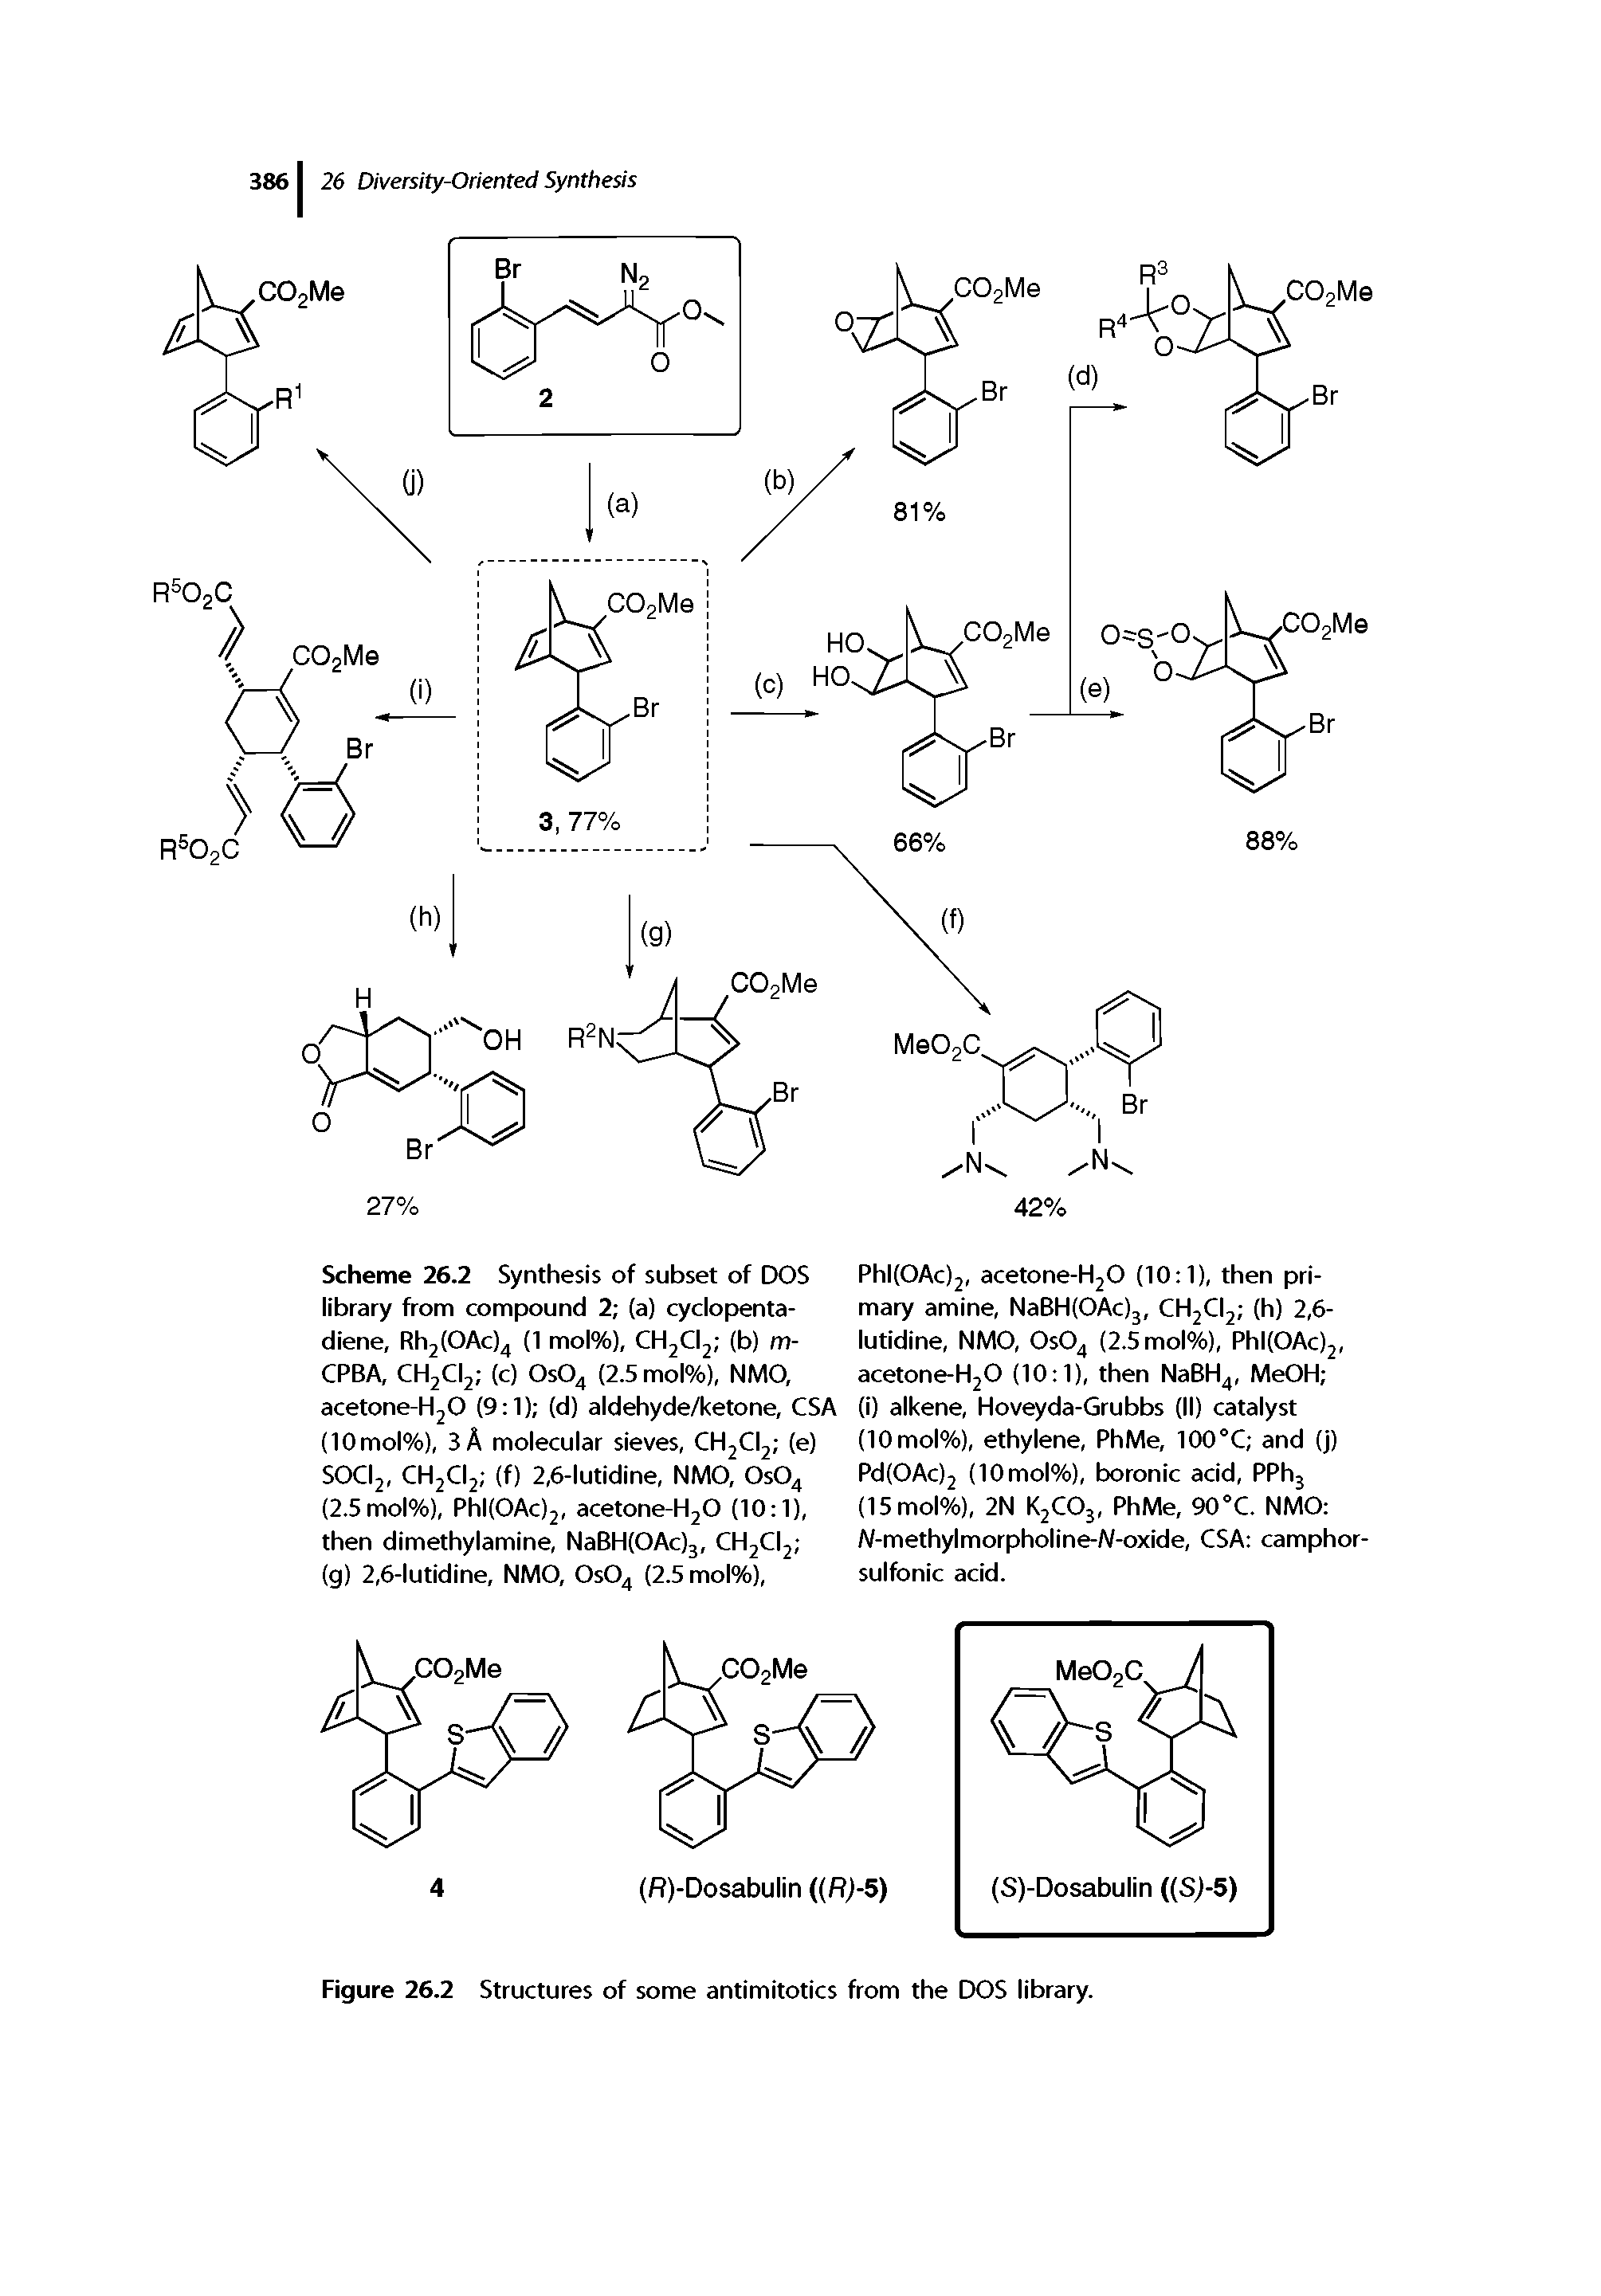 Scheme 26.2 Synthesis of subset of DOS library from compound 2 (a) cyclopenta-diene, RhjfOAc) (1 mol%), CHjClj (b) m-CPBA, CHjCI (c) OSO4 (2.5mol%), NMO, acetone-HjO (9 1) (d) aldehyde/ketone, CSA (10mol%), 3 A molecular sieves, CHjClj,- (e) SOCI2, CH2CI2 (f) 2,6-lutidine, NMO, OSO4 (2.5mol%), Phl(OAc)2, acetone-HjO (10 1), then dimethylamine, NaBH(OAc)3, CHjClj ...